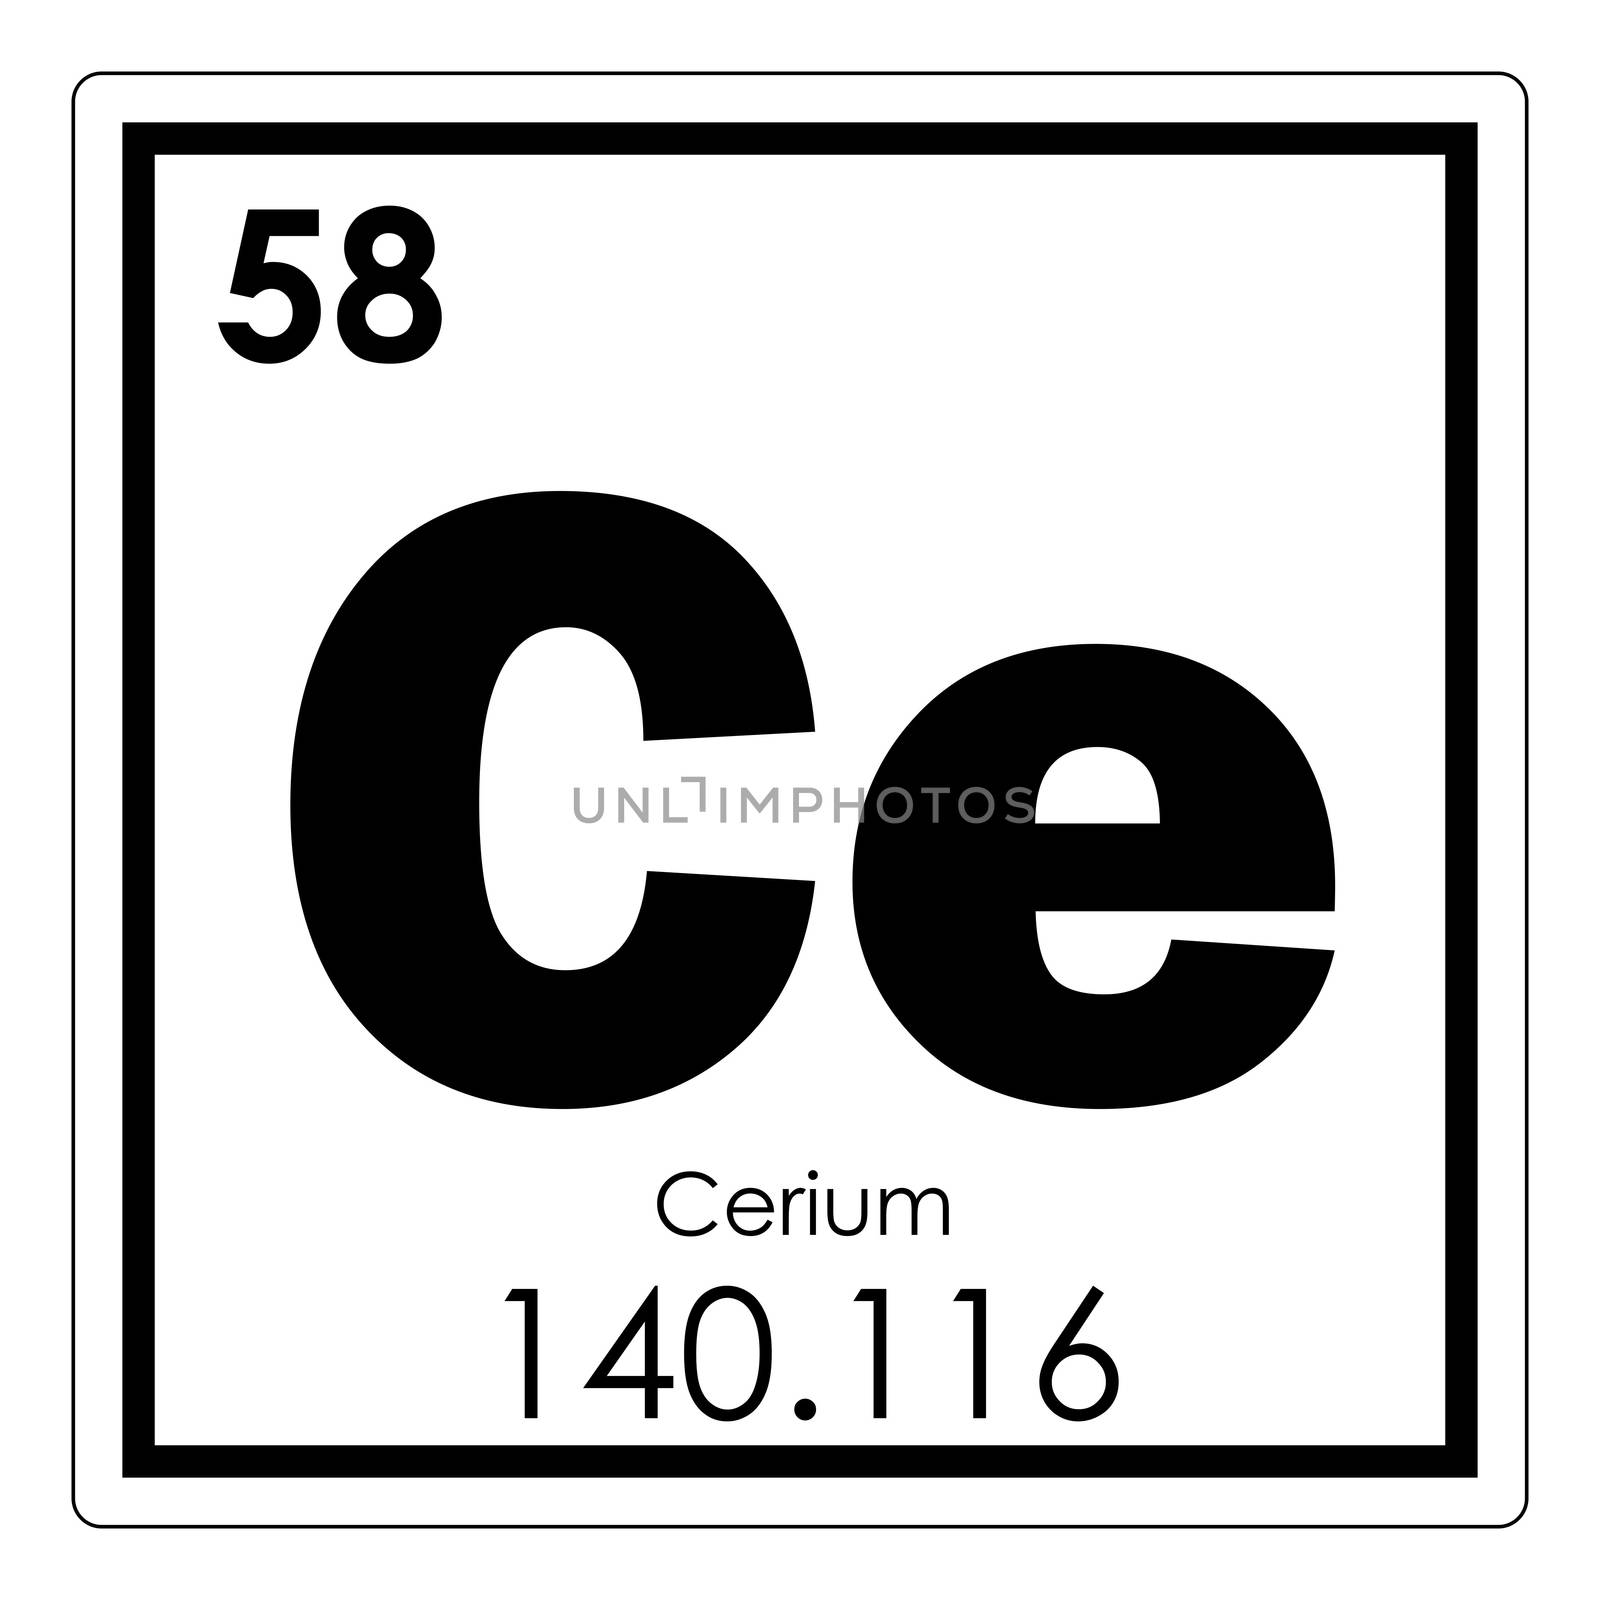 Cerium chemical element by tony4urban